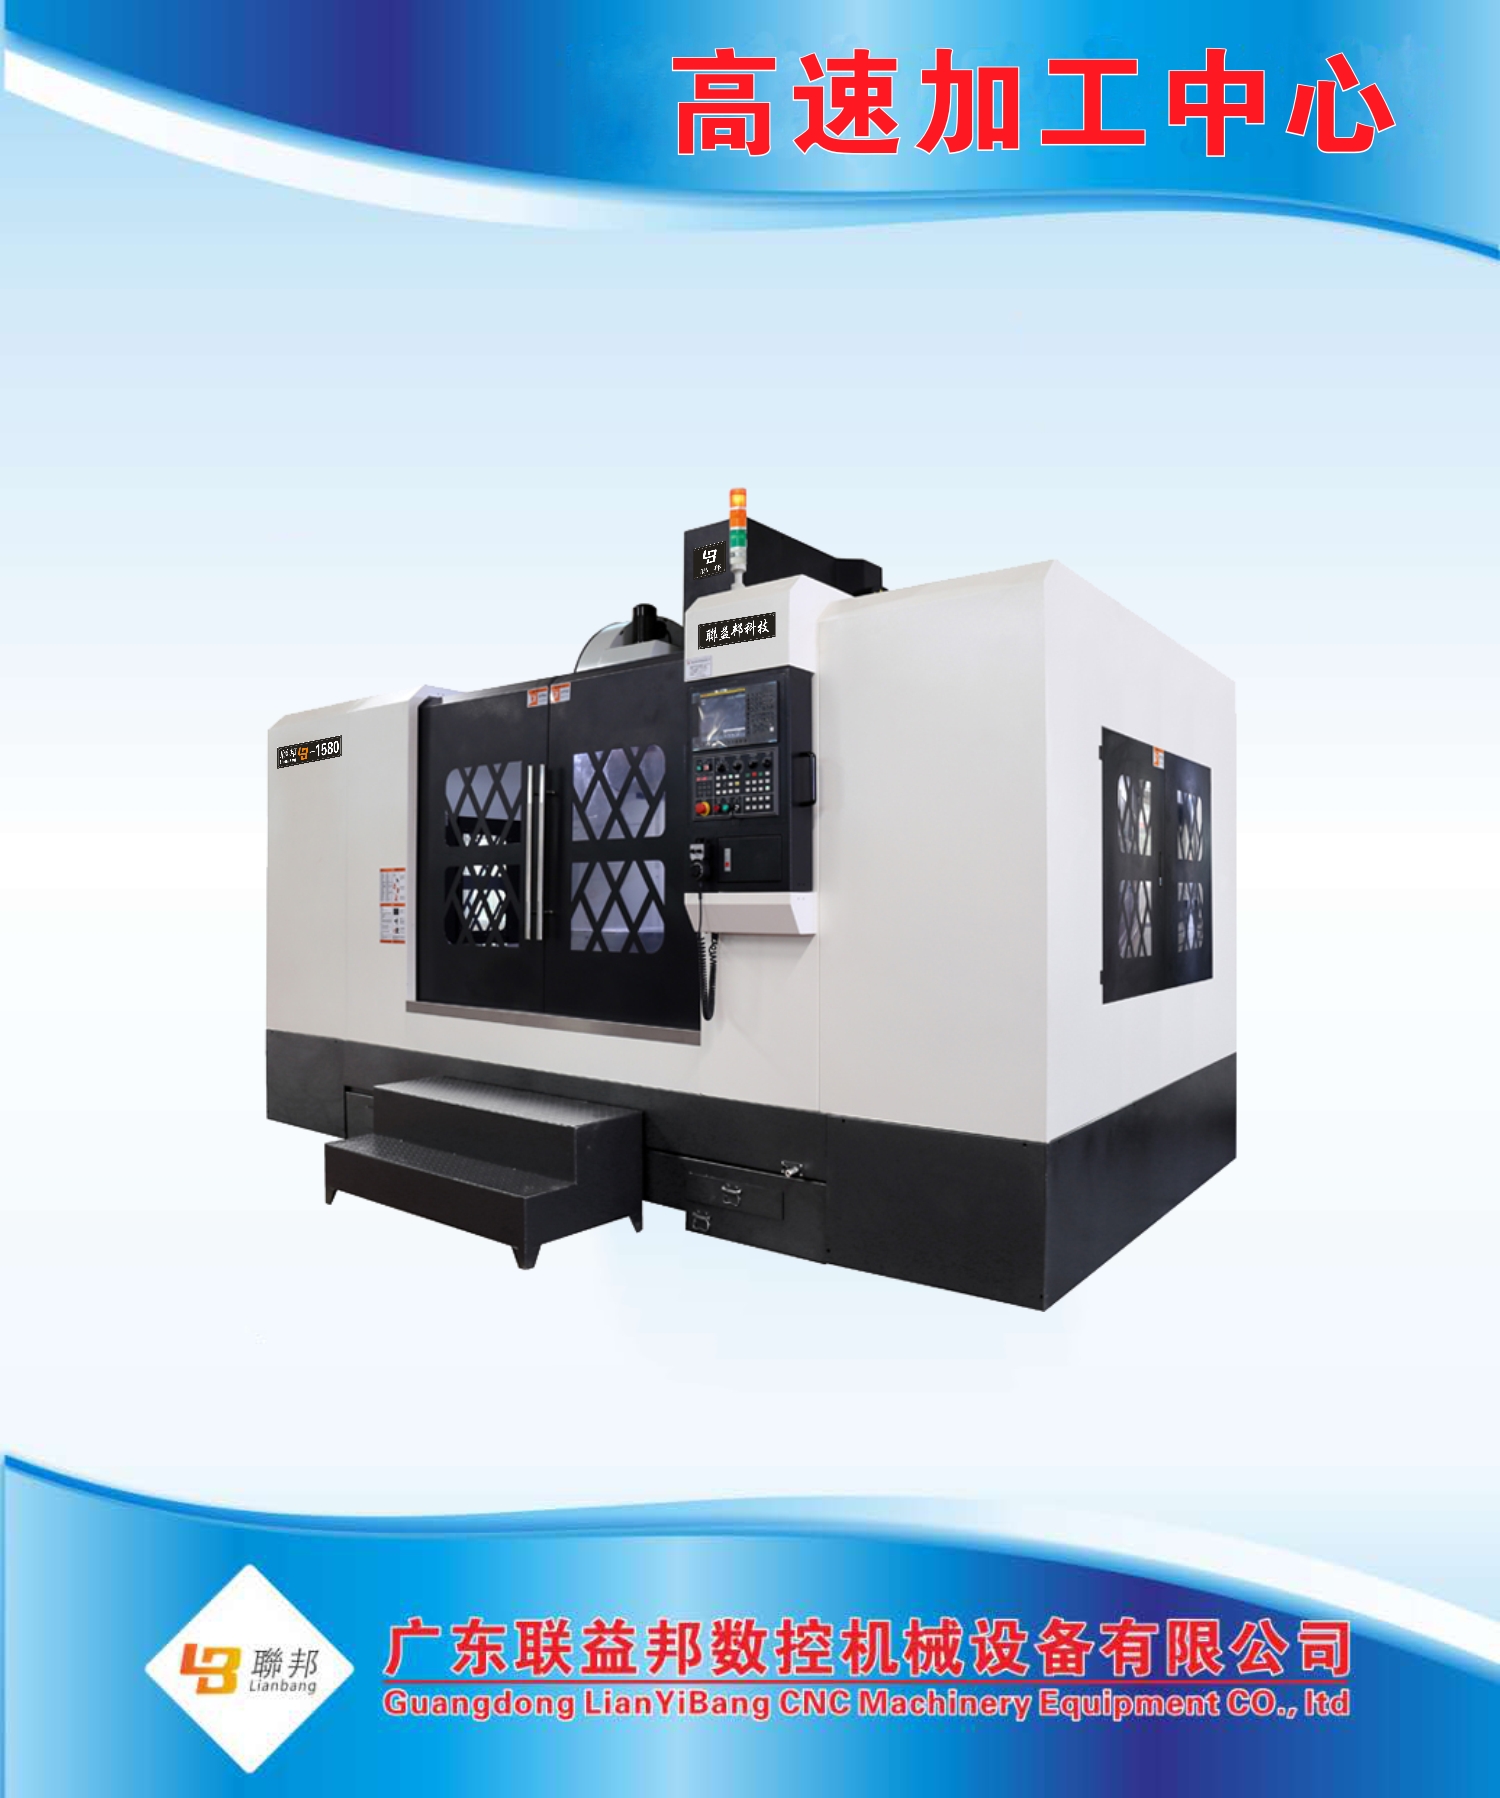  Mold processing center lb-1580